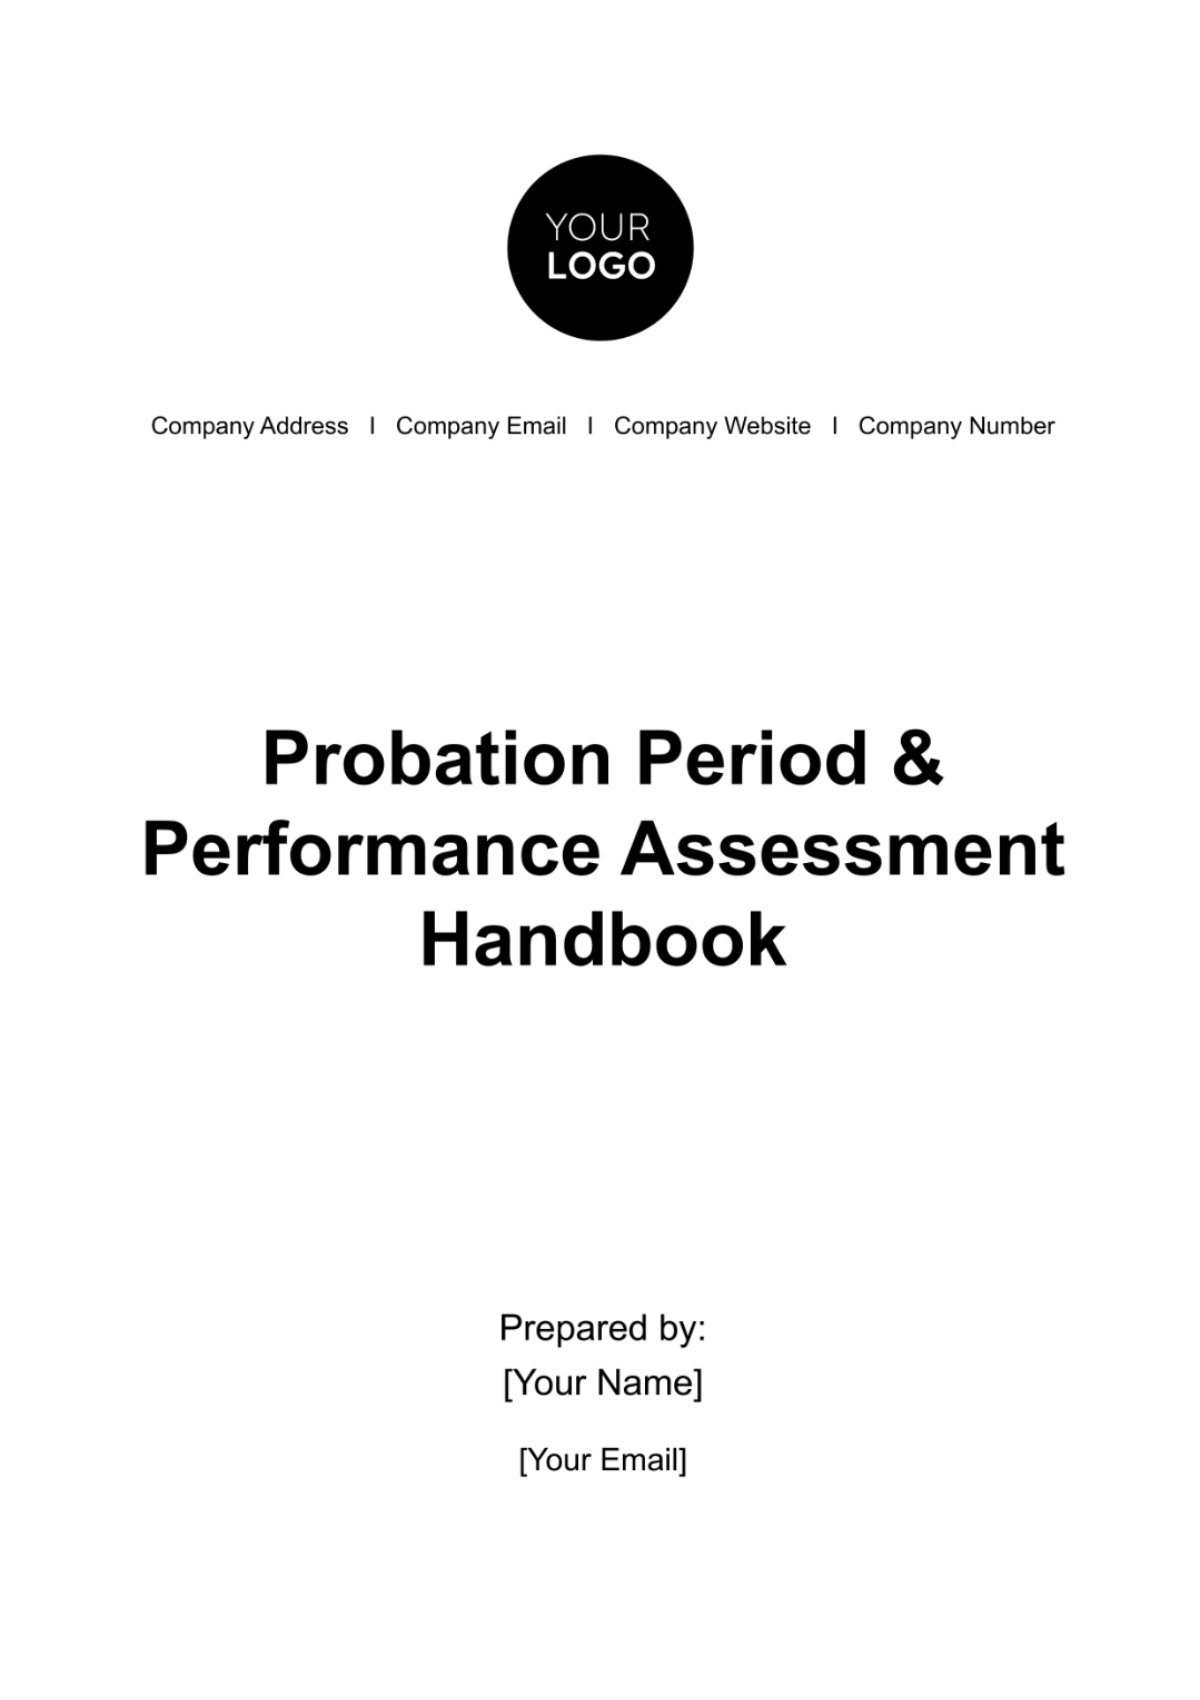 Free Probation Period & Performance Assessment Handbook HR Template